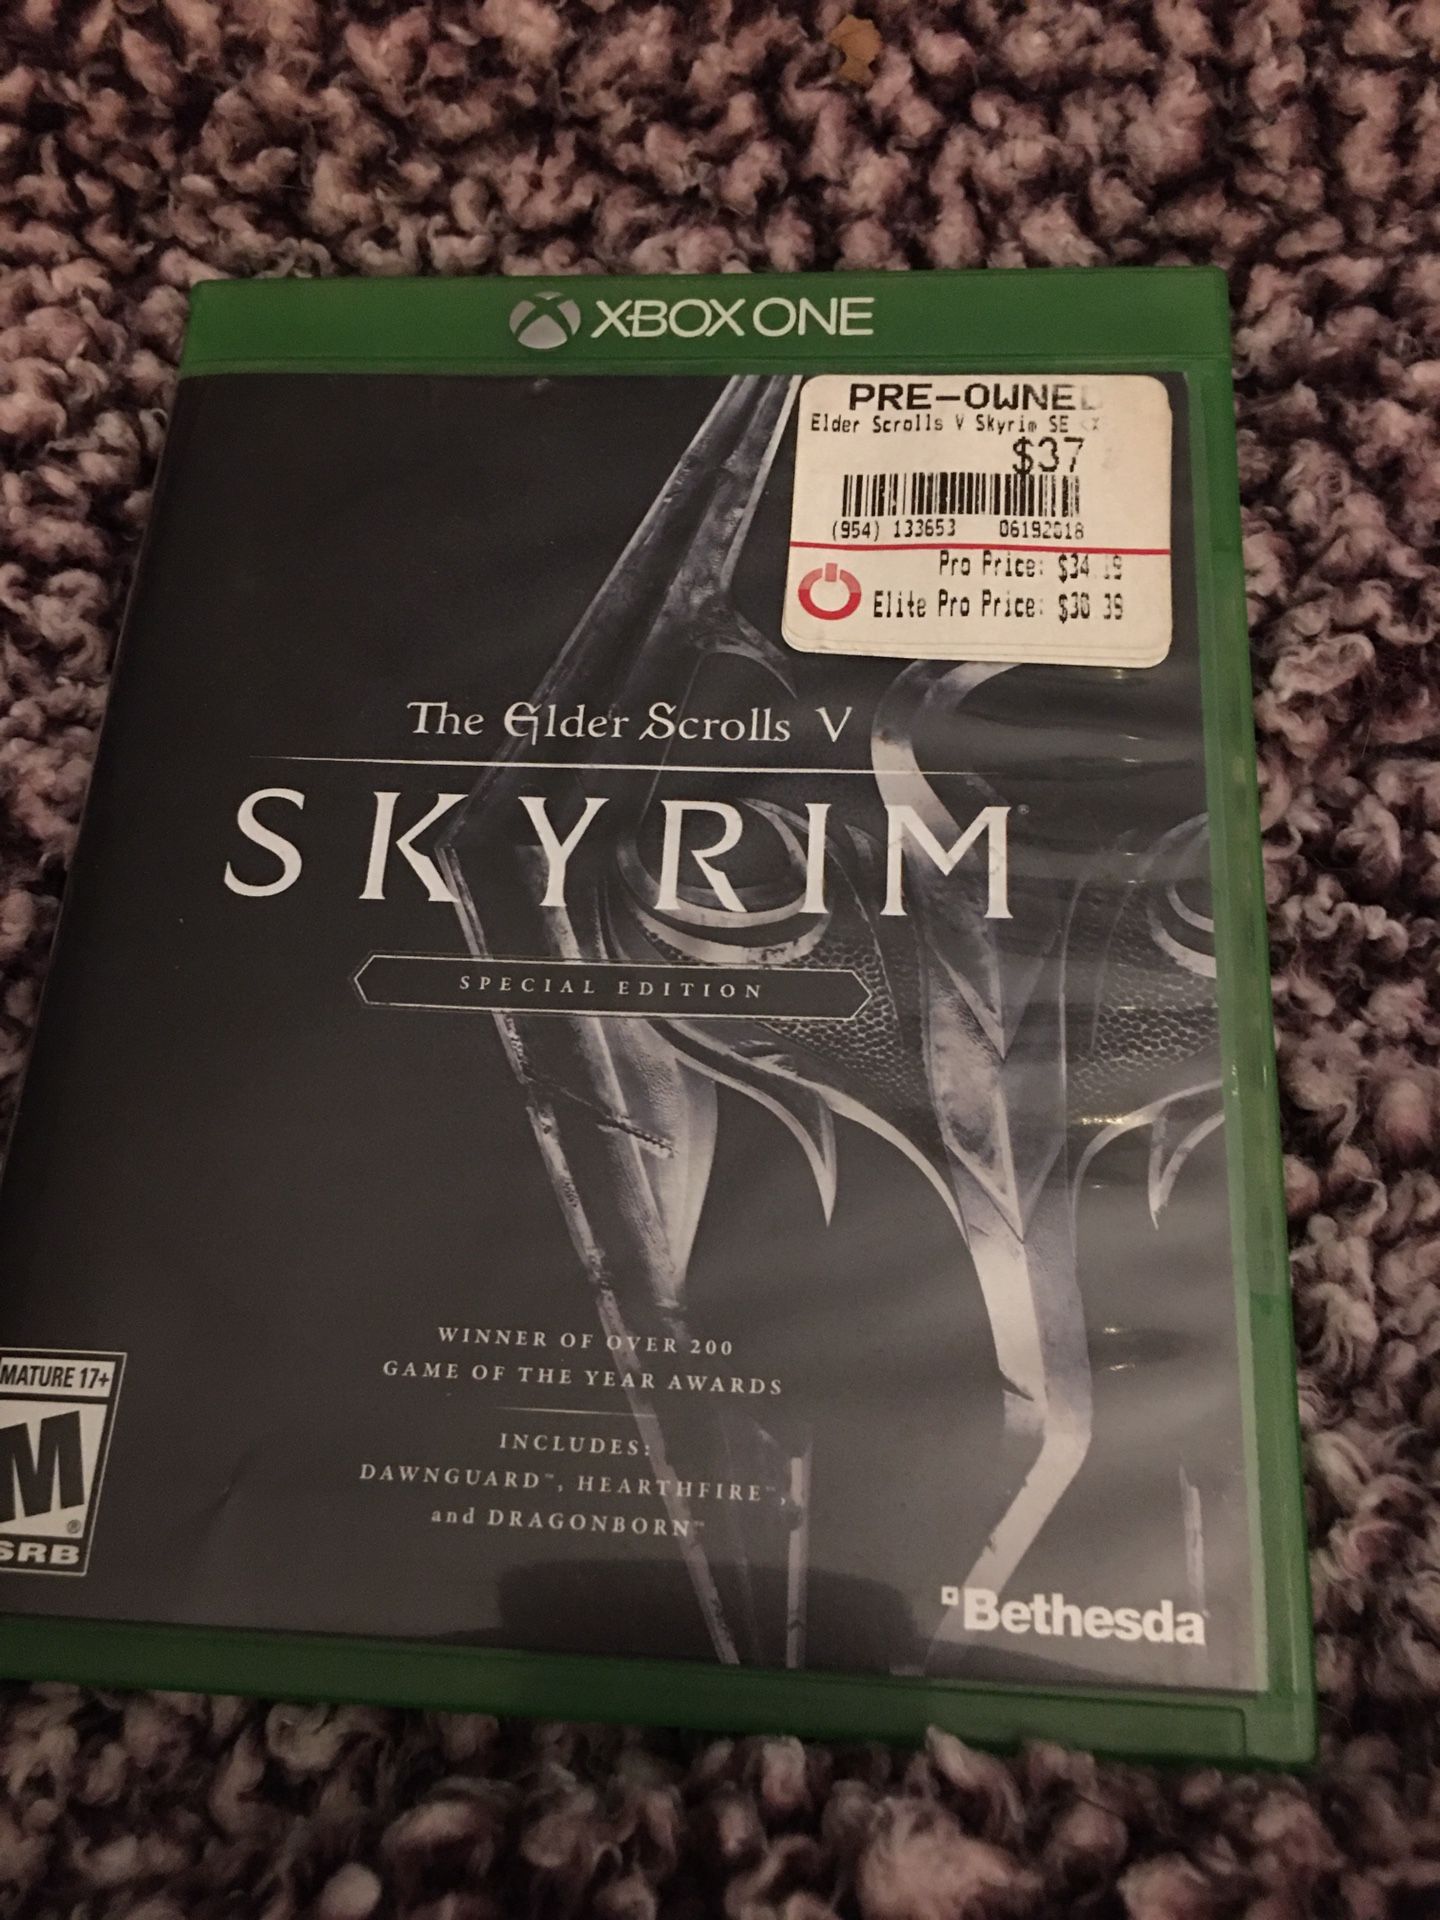 Skyrim special edition Xbox one game